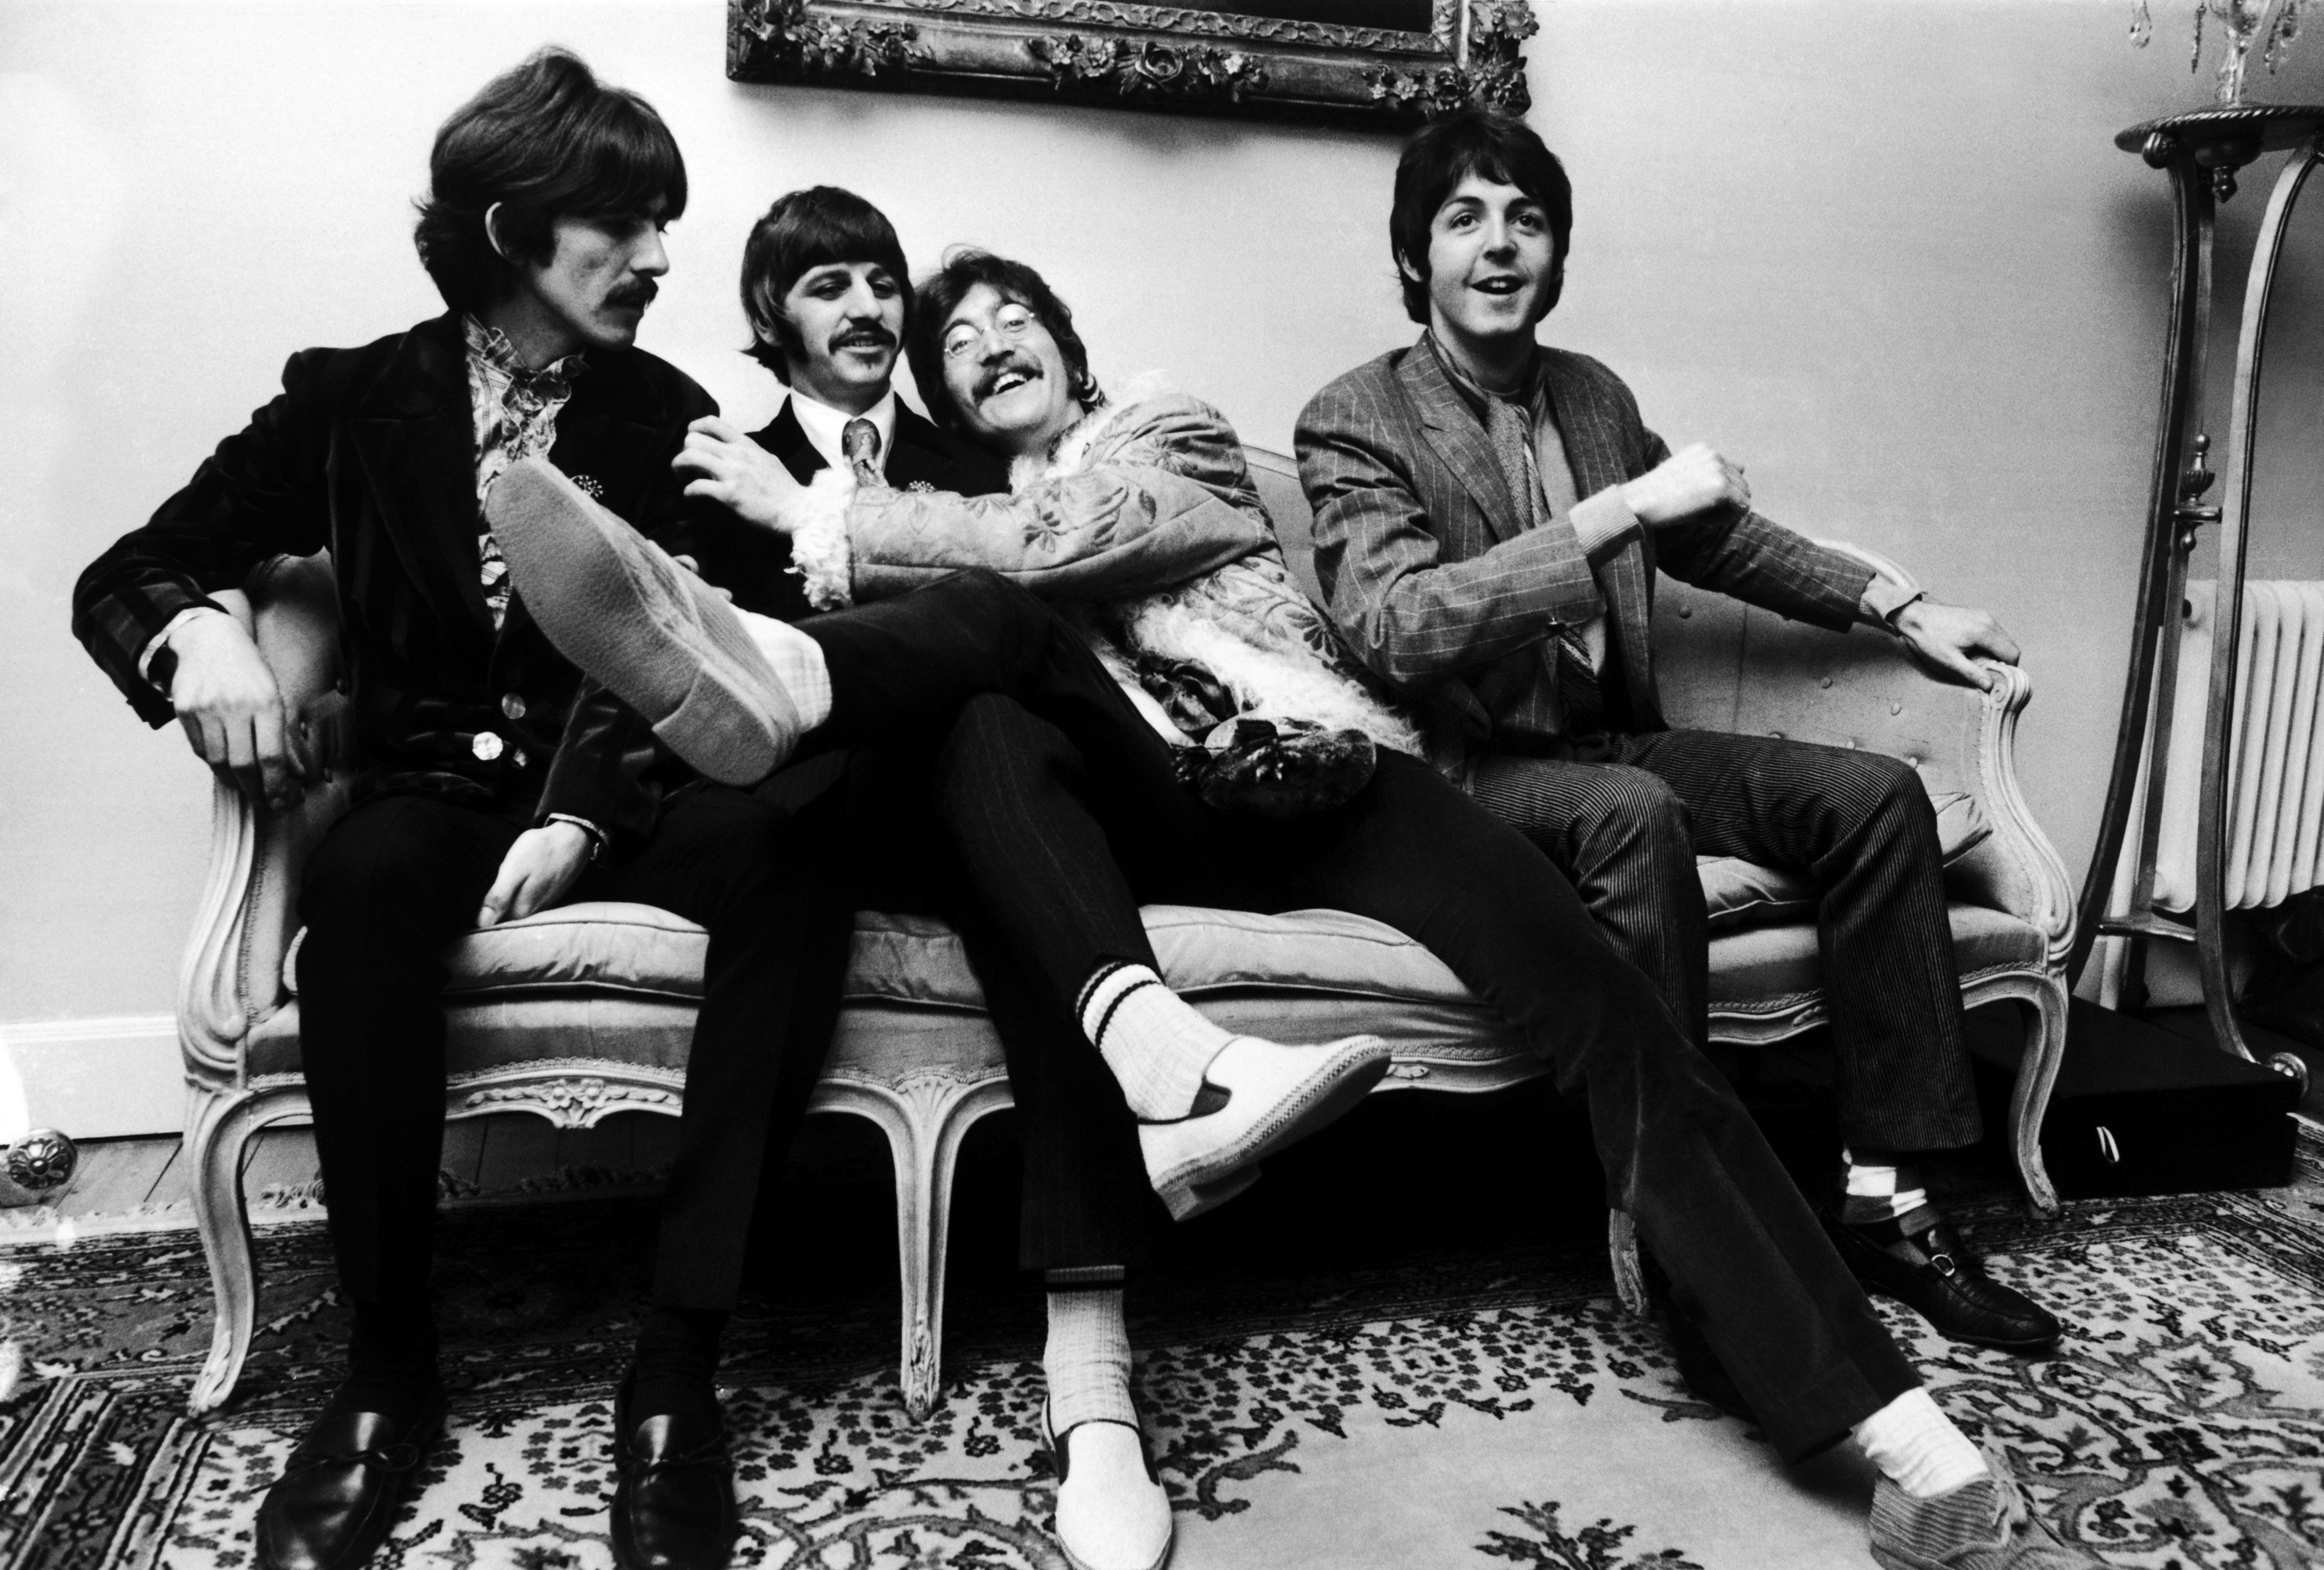 The Beatles' George Harrison, Ringo Starr, John Lennon, and Paul McCartney on a couch